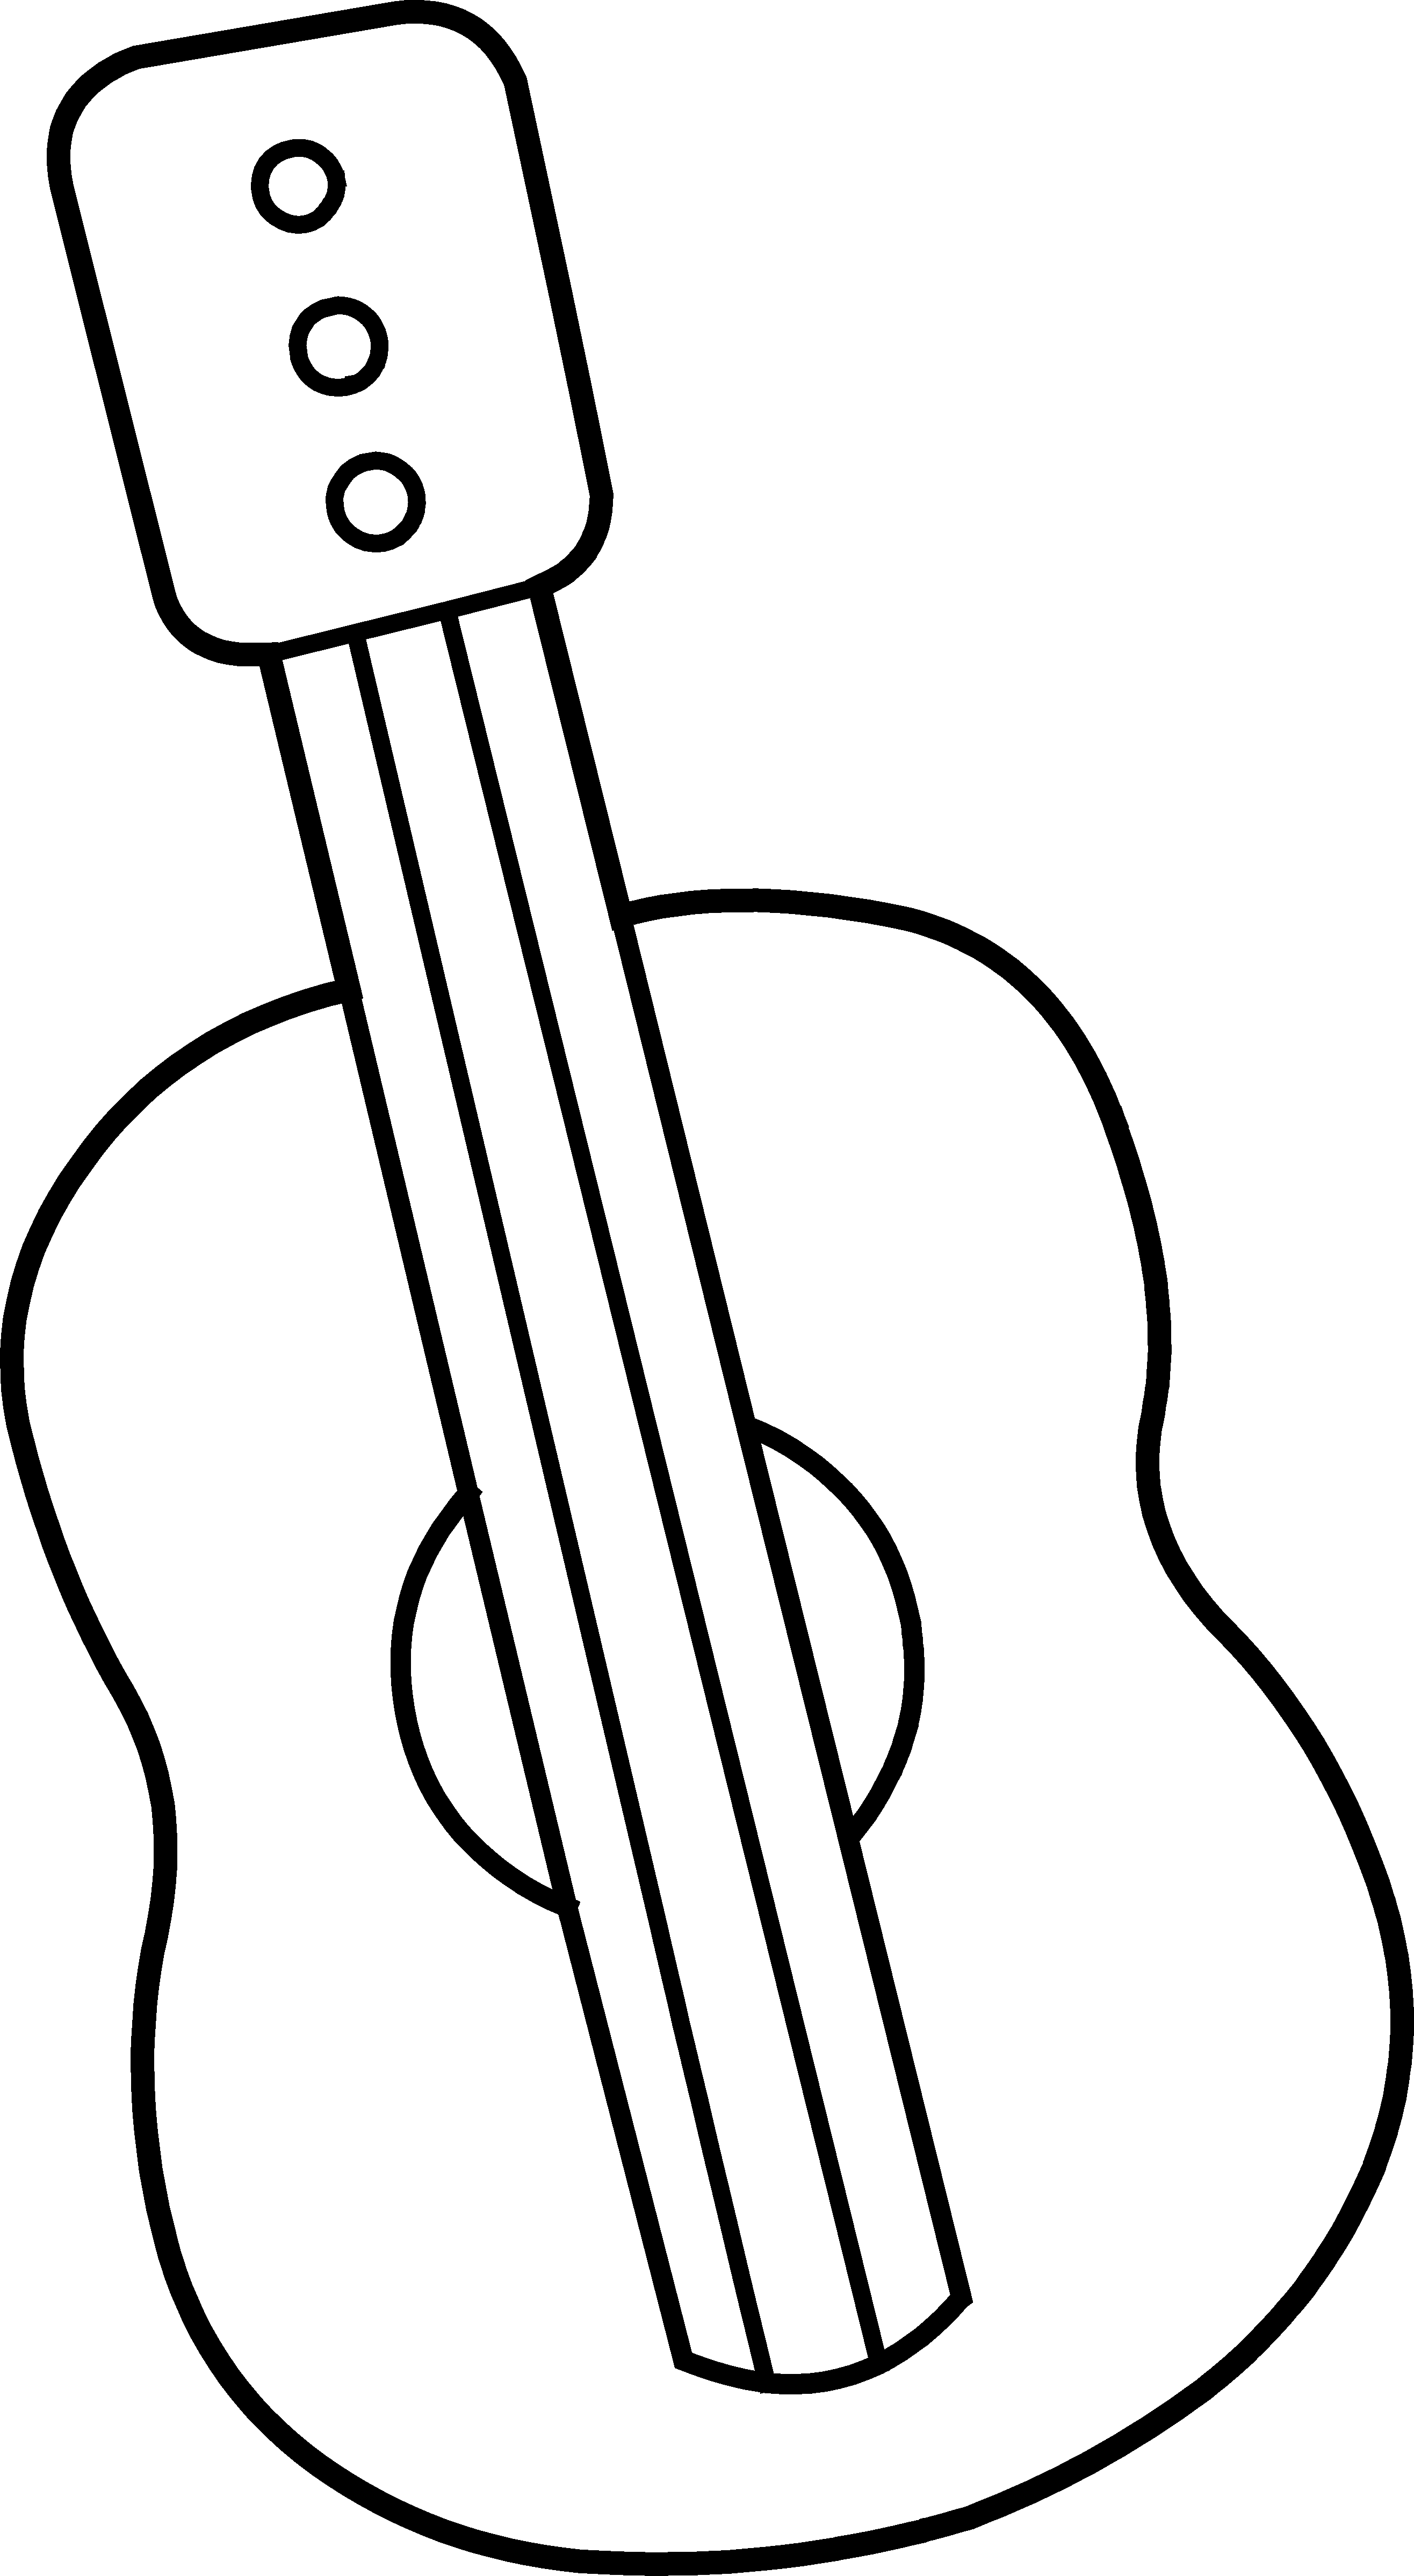 Guitar Outline Clipart